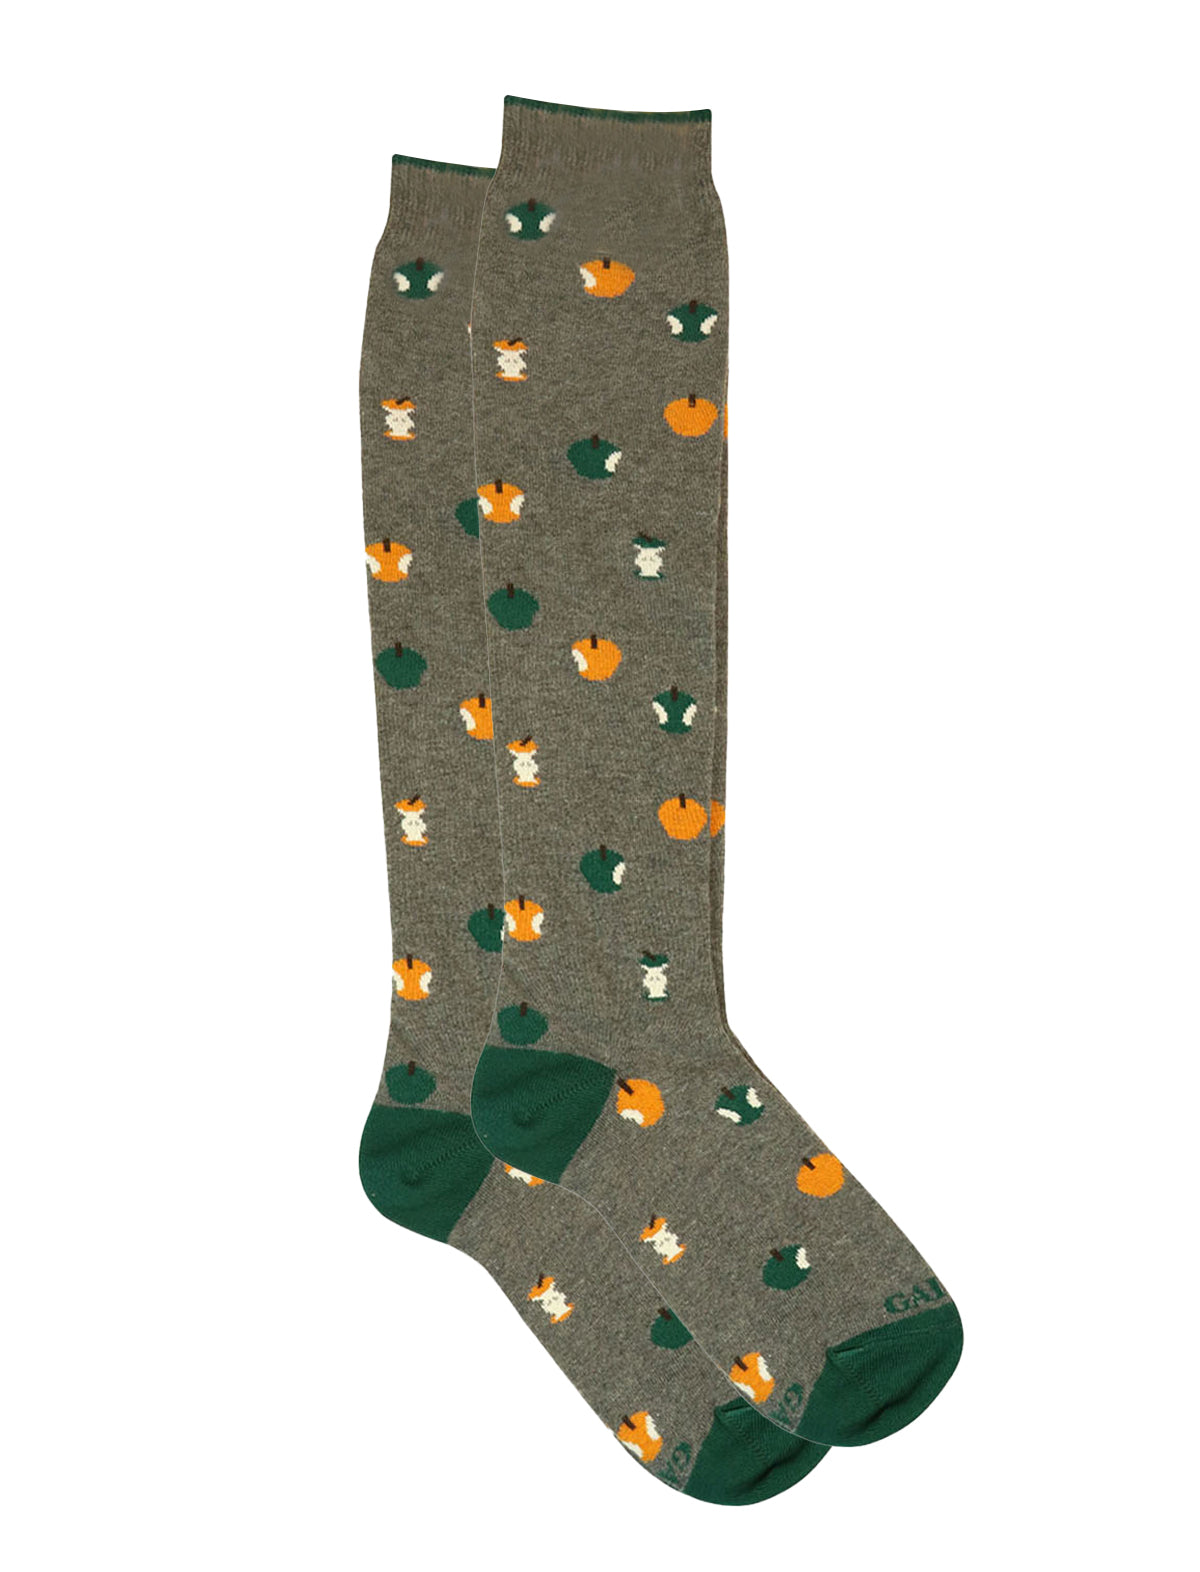 Gallo Long Socks in Grey w/ Apples Print